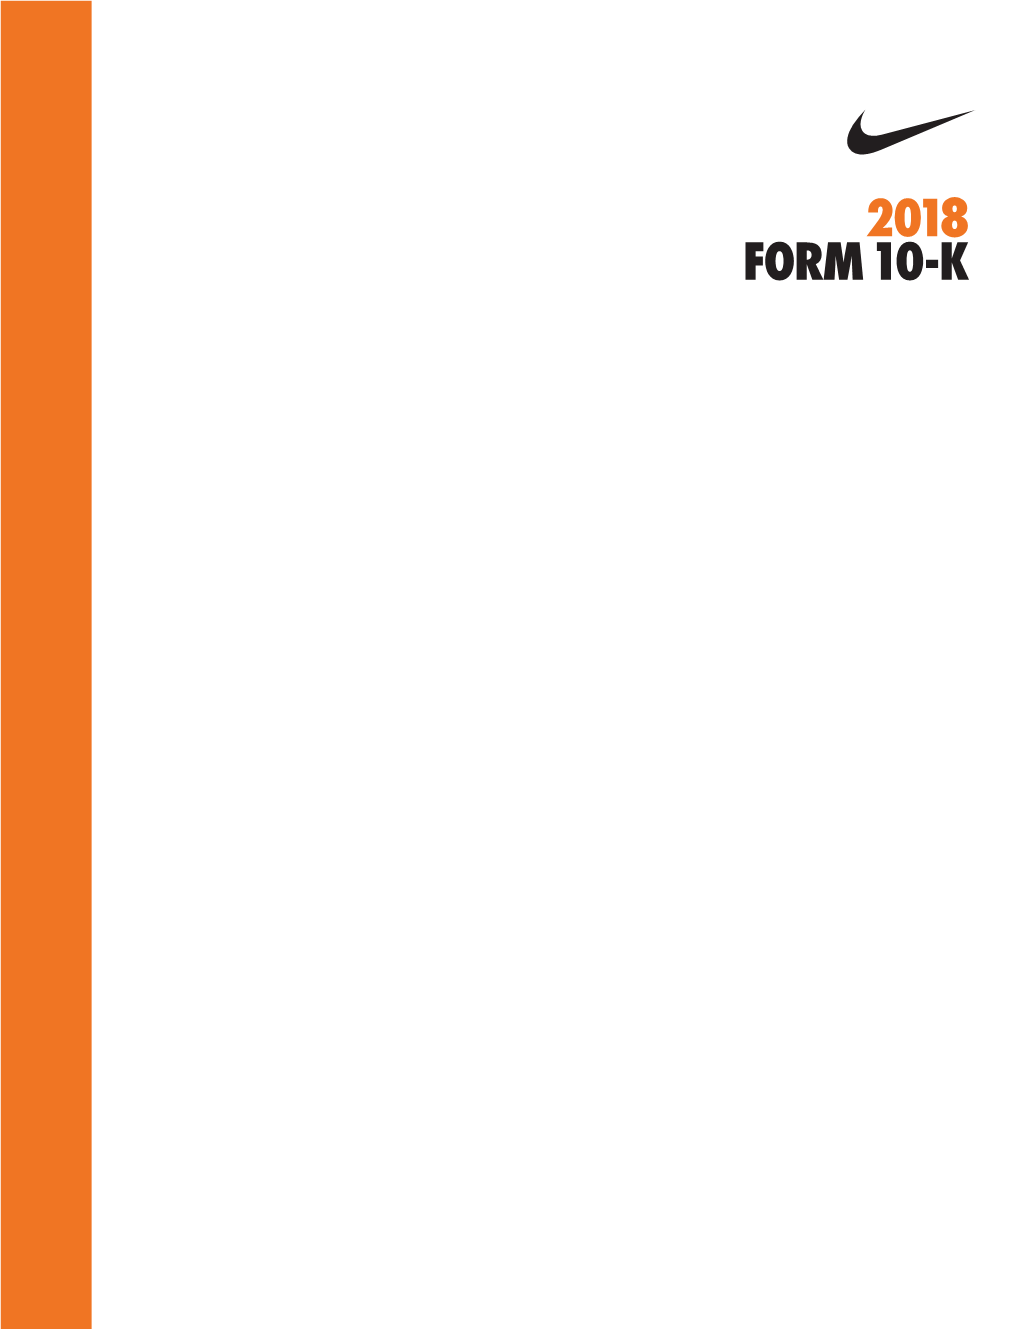 Nike-2018-Form-10K.Pdf